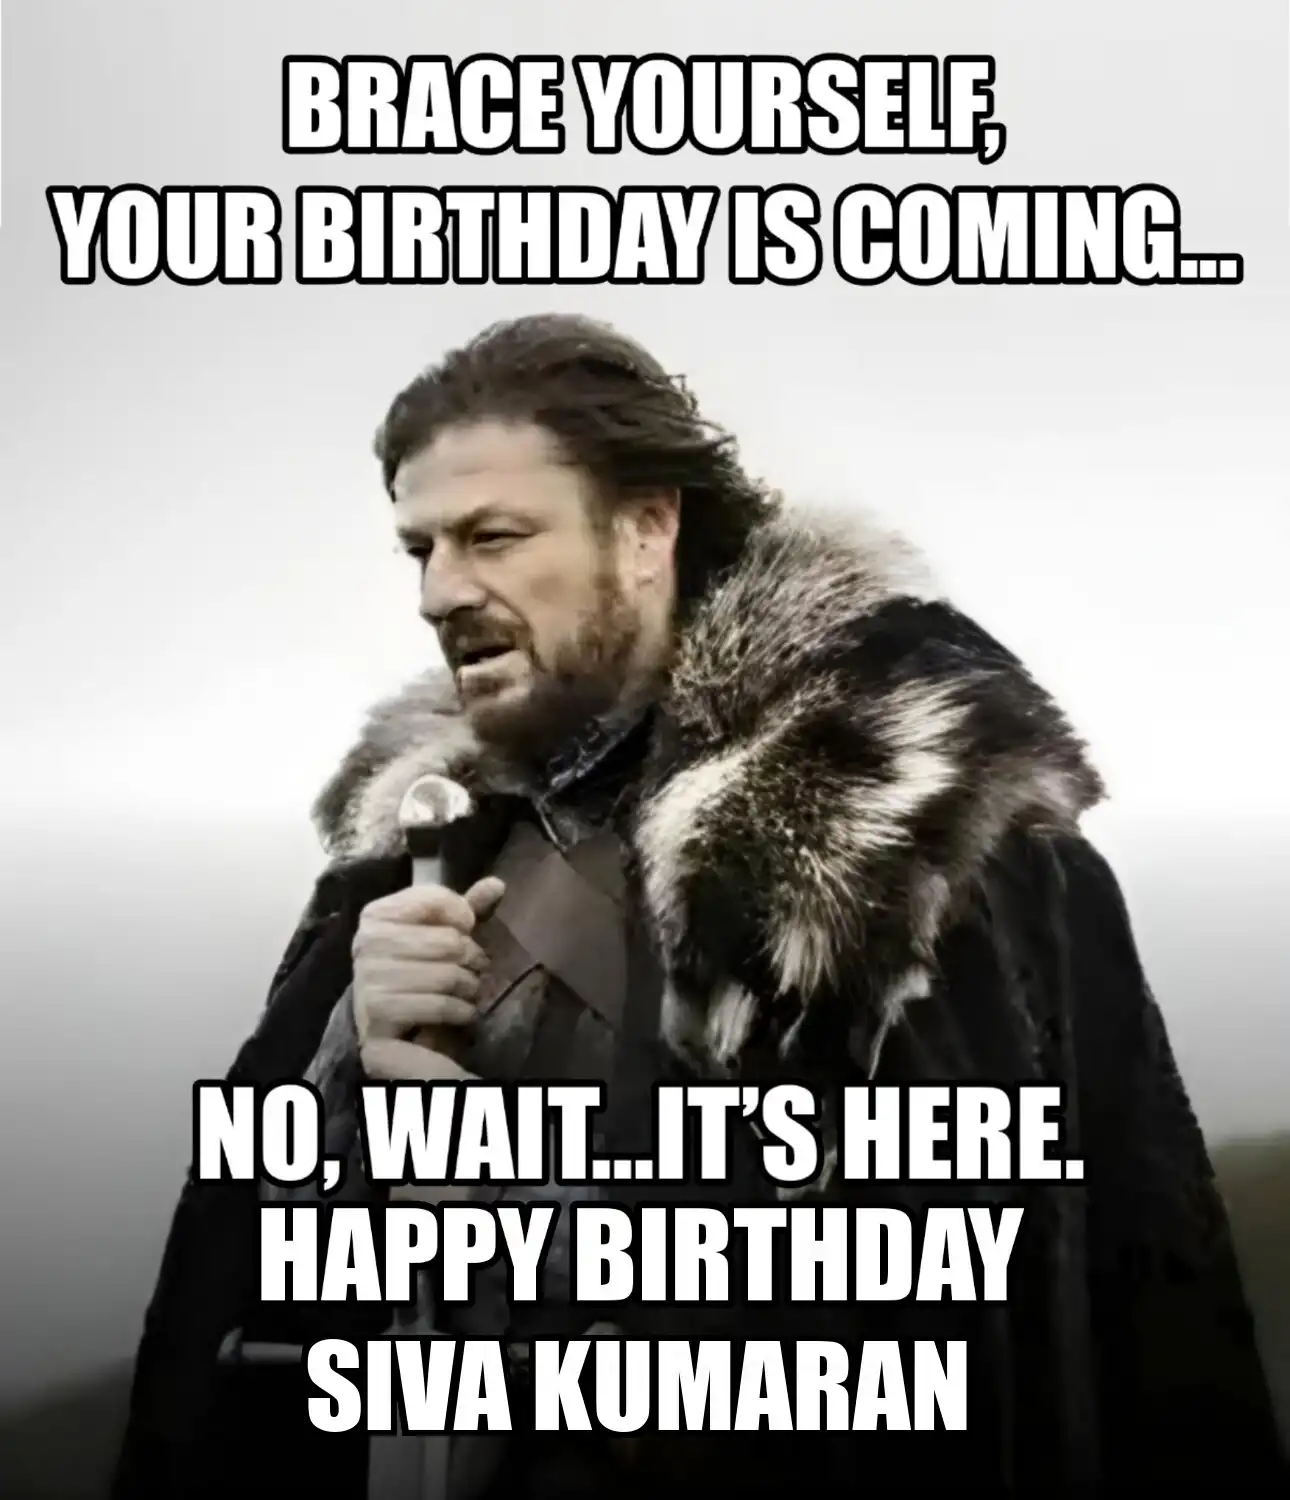 Happy Birthday Siva Kumaran Brace Yourself Your Birthday Is Coming Meme